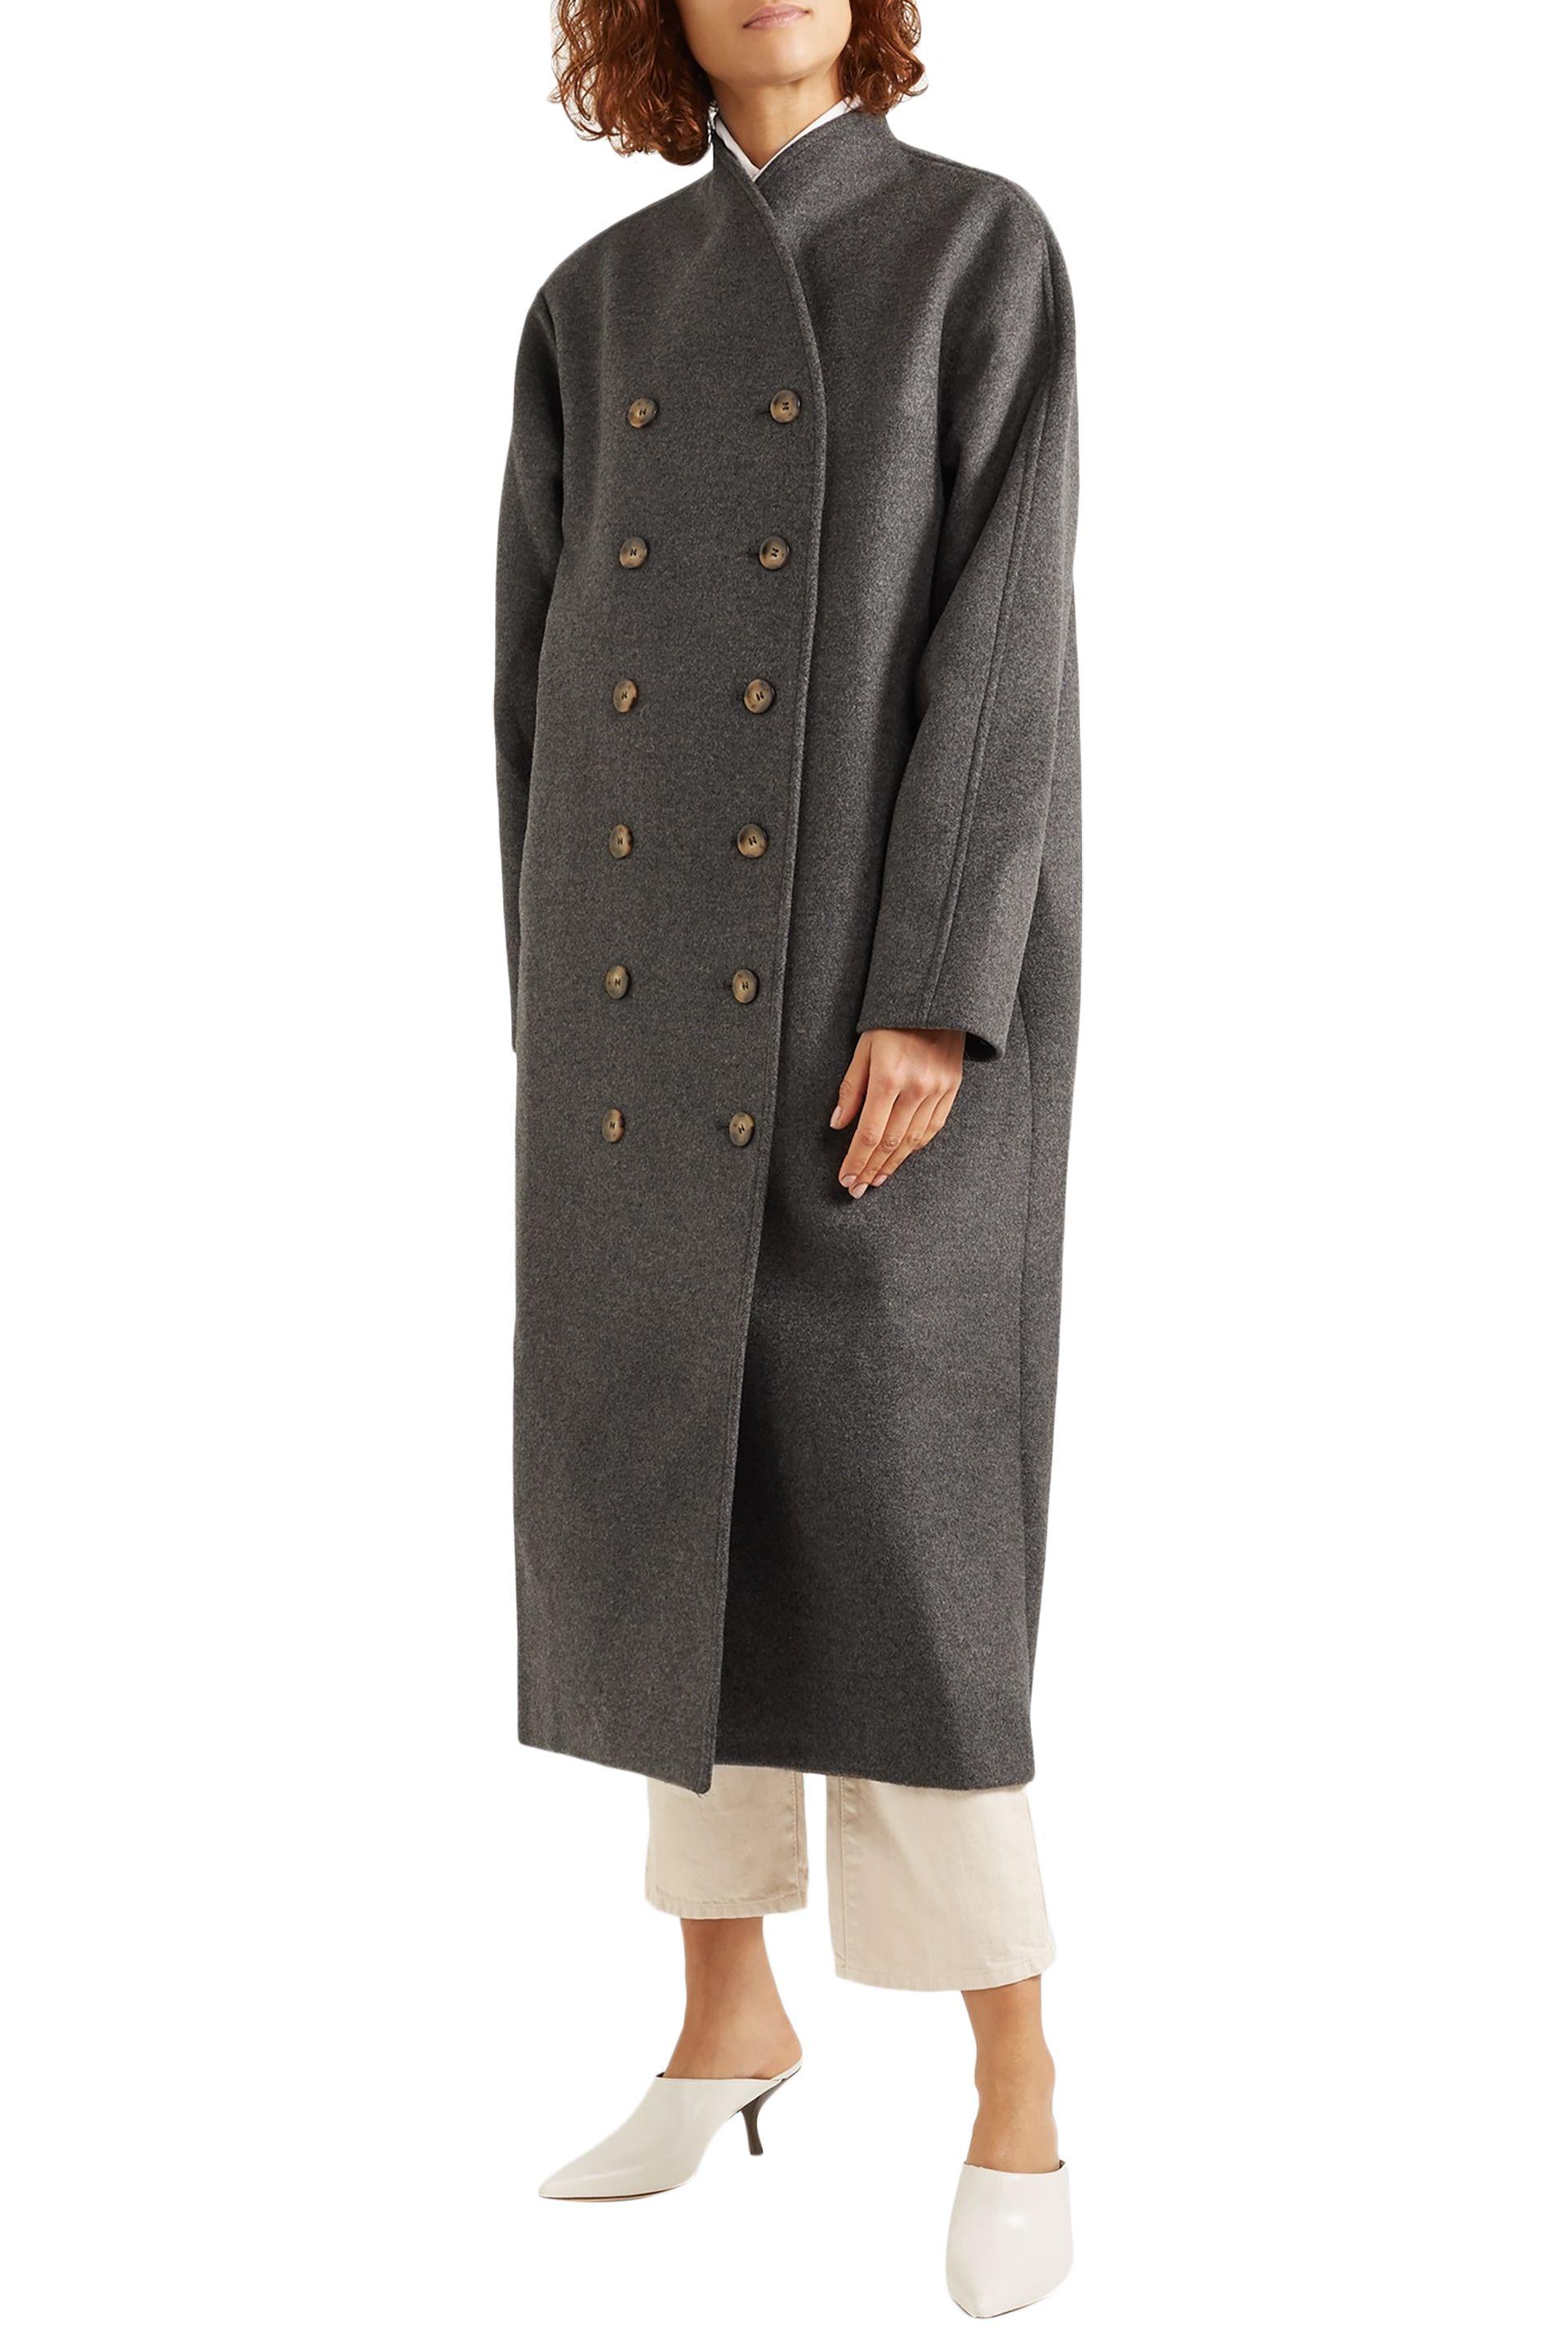 Totême Bergerac Oversized Double-breasted Wool-blend Felt Coat in Dark ...